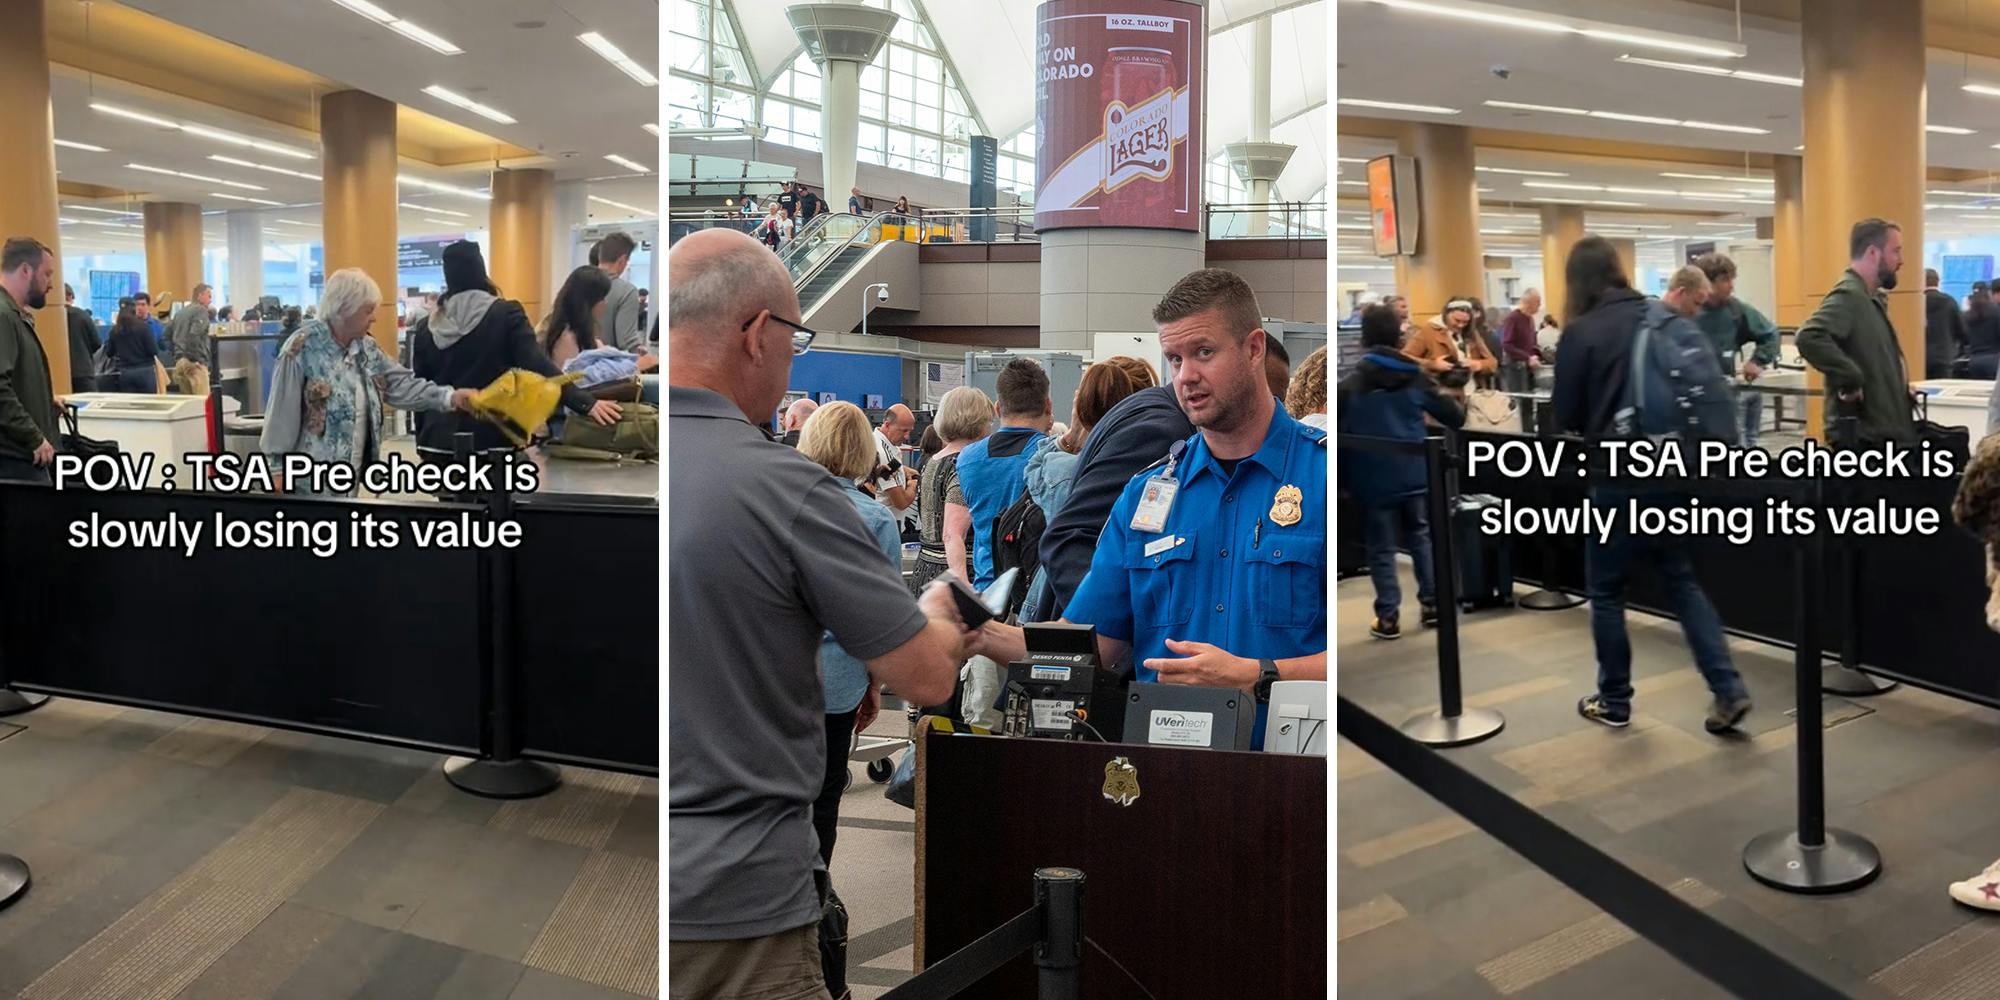 Traveler says TSA pre-check is no longer worth it